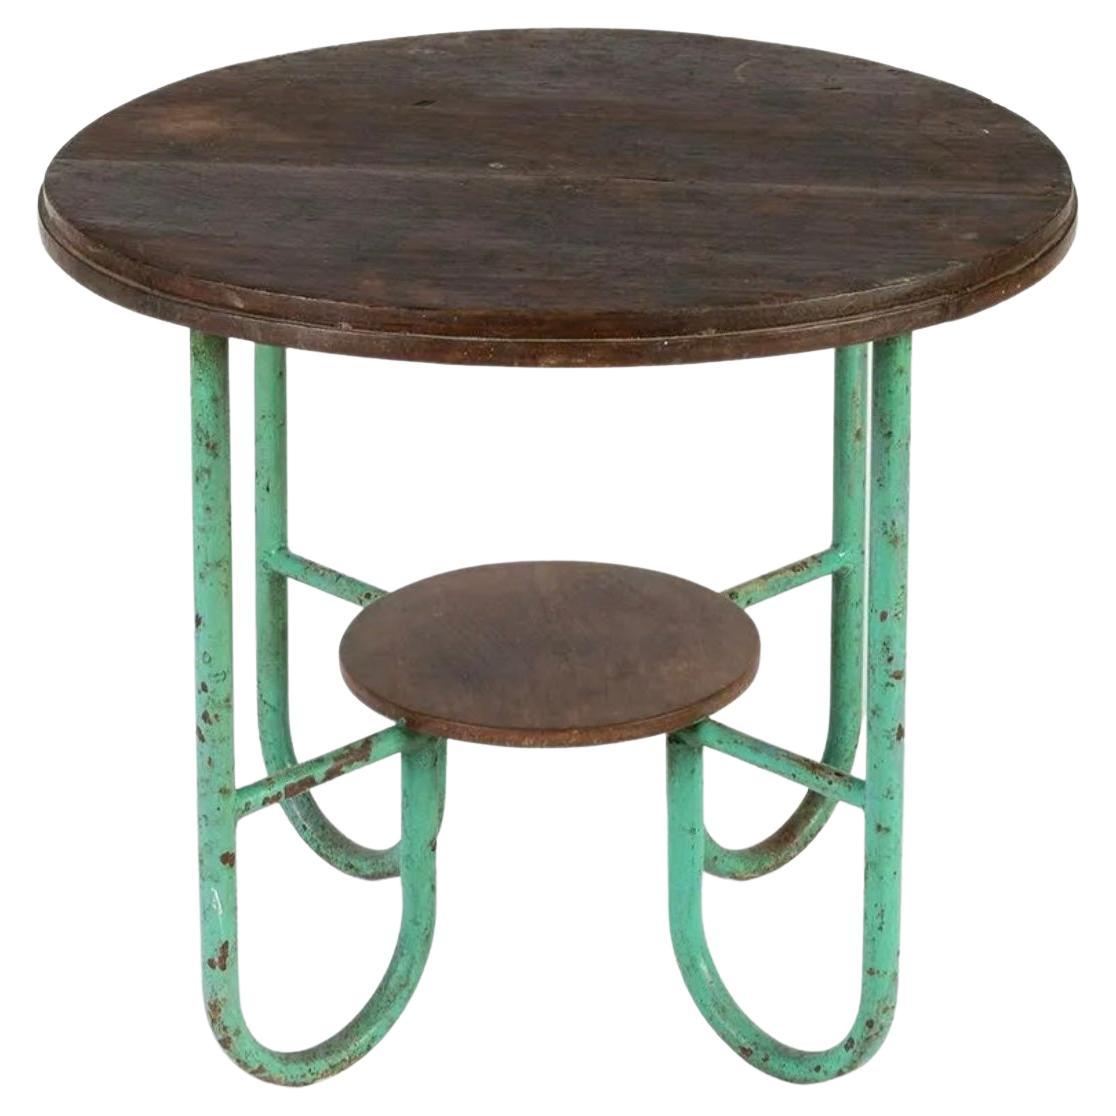 Vintage Industrial Coffee Table, Side Table, France, 1930's Patina Walnut Steel 